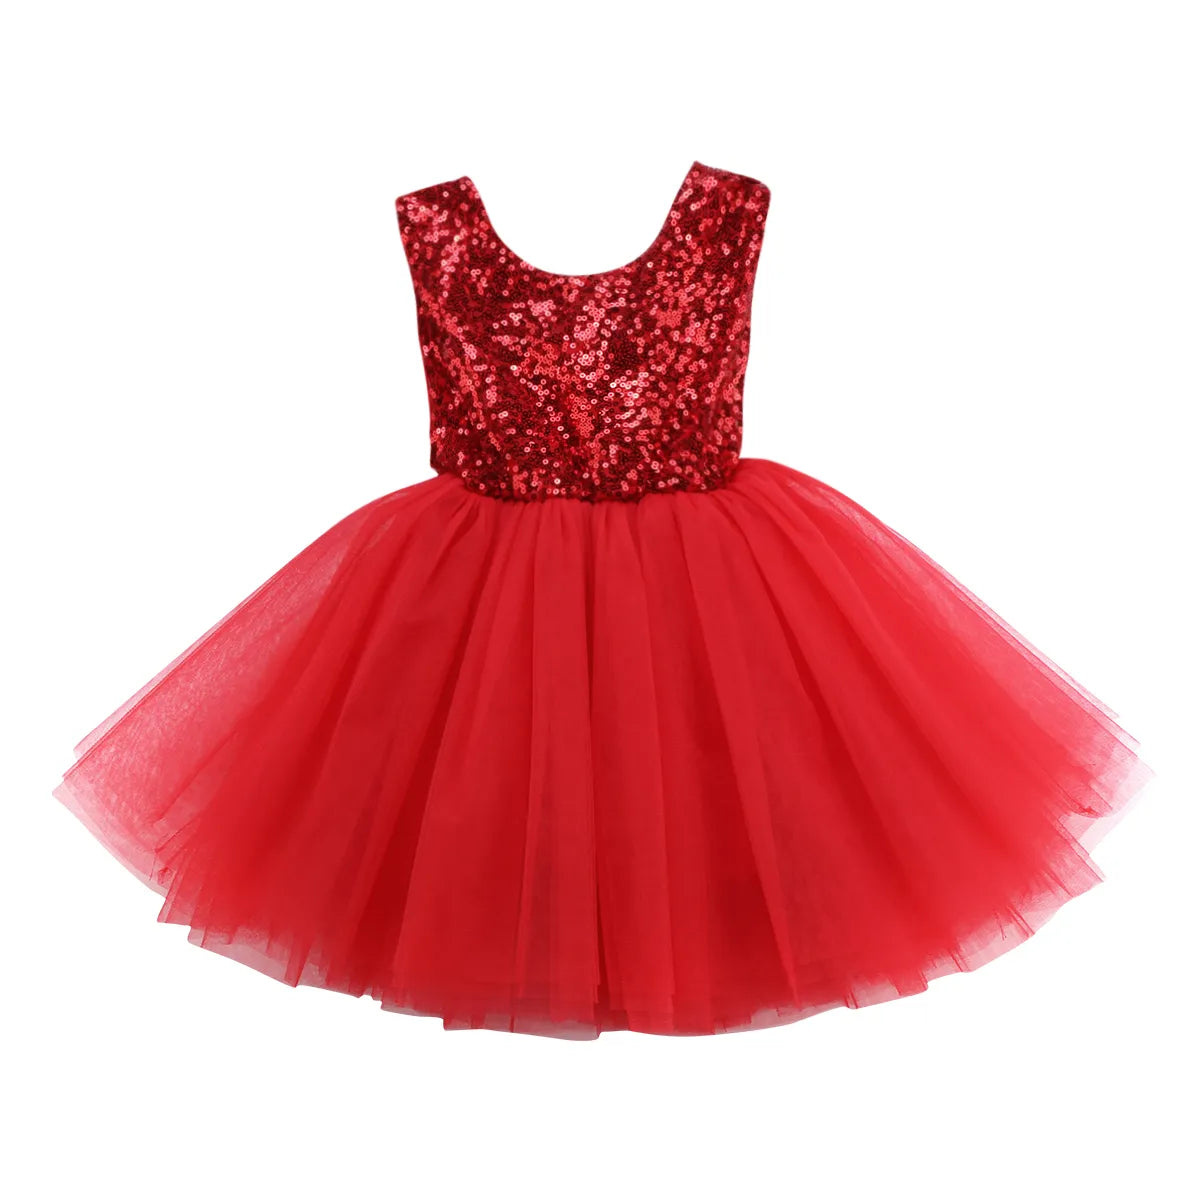 Baby Girl Black Tutu Dress toddler Ball Gown With Tulle Skirt Red by Baby Minaj Cruz